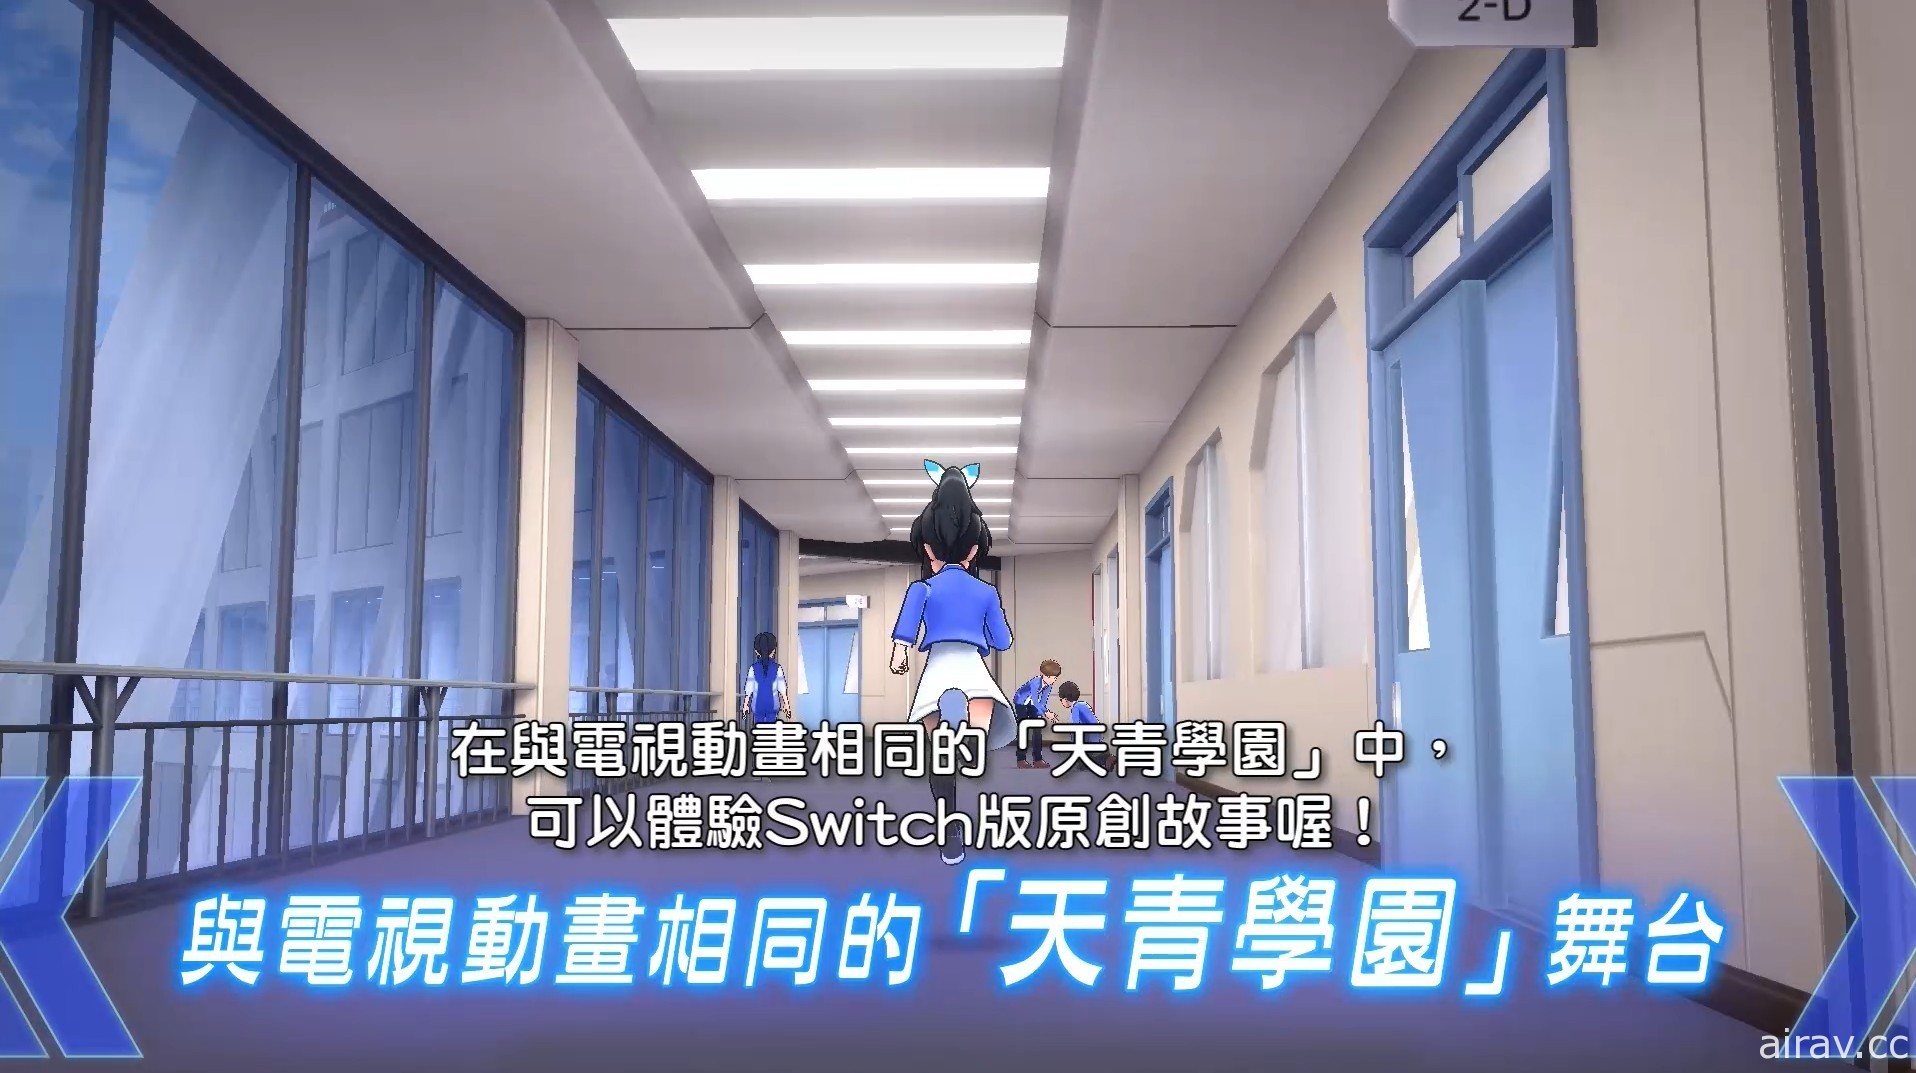 Switch 卡片對戰 RPG《闇影詩章‧霸者之戰》中文版 12 月 3 日發售